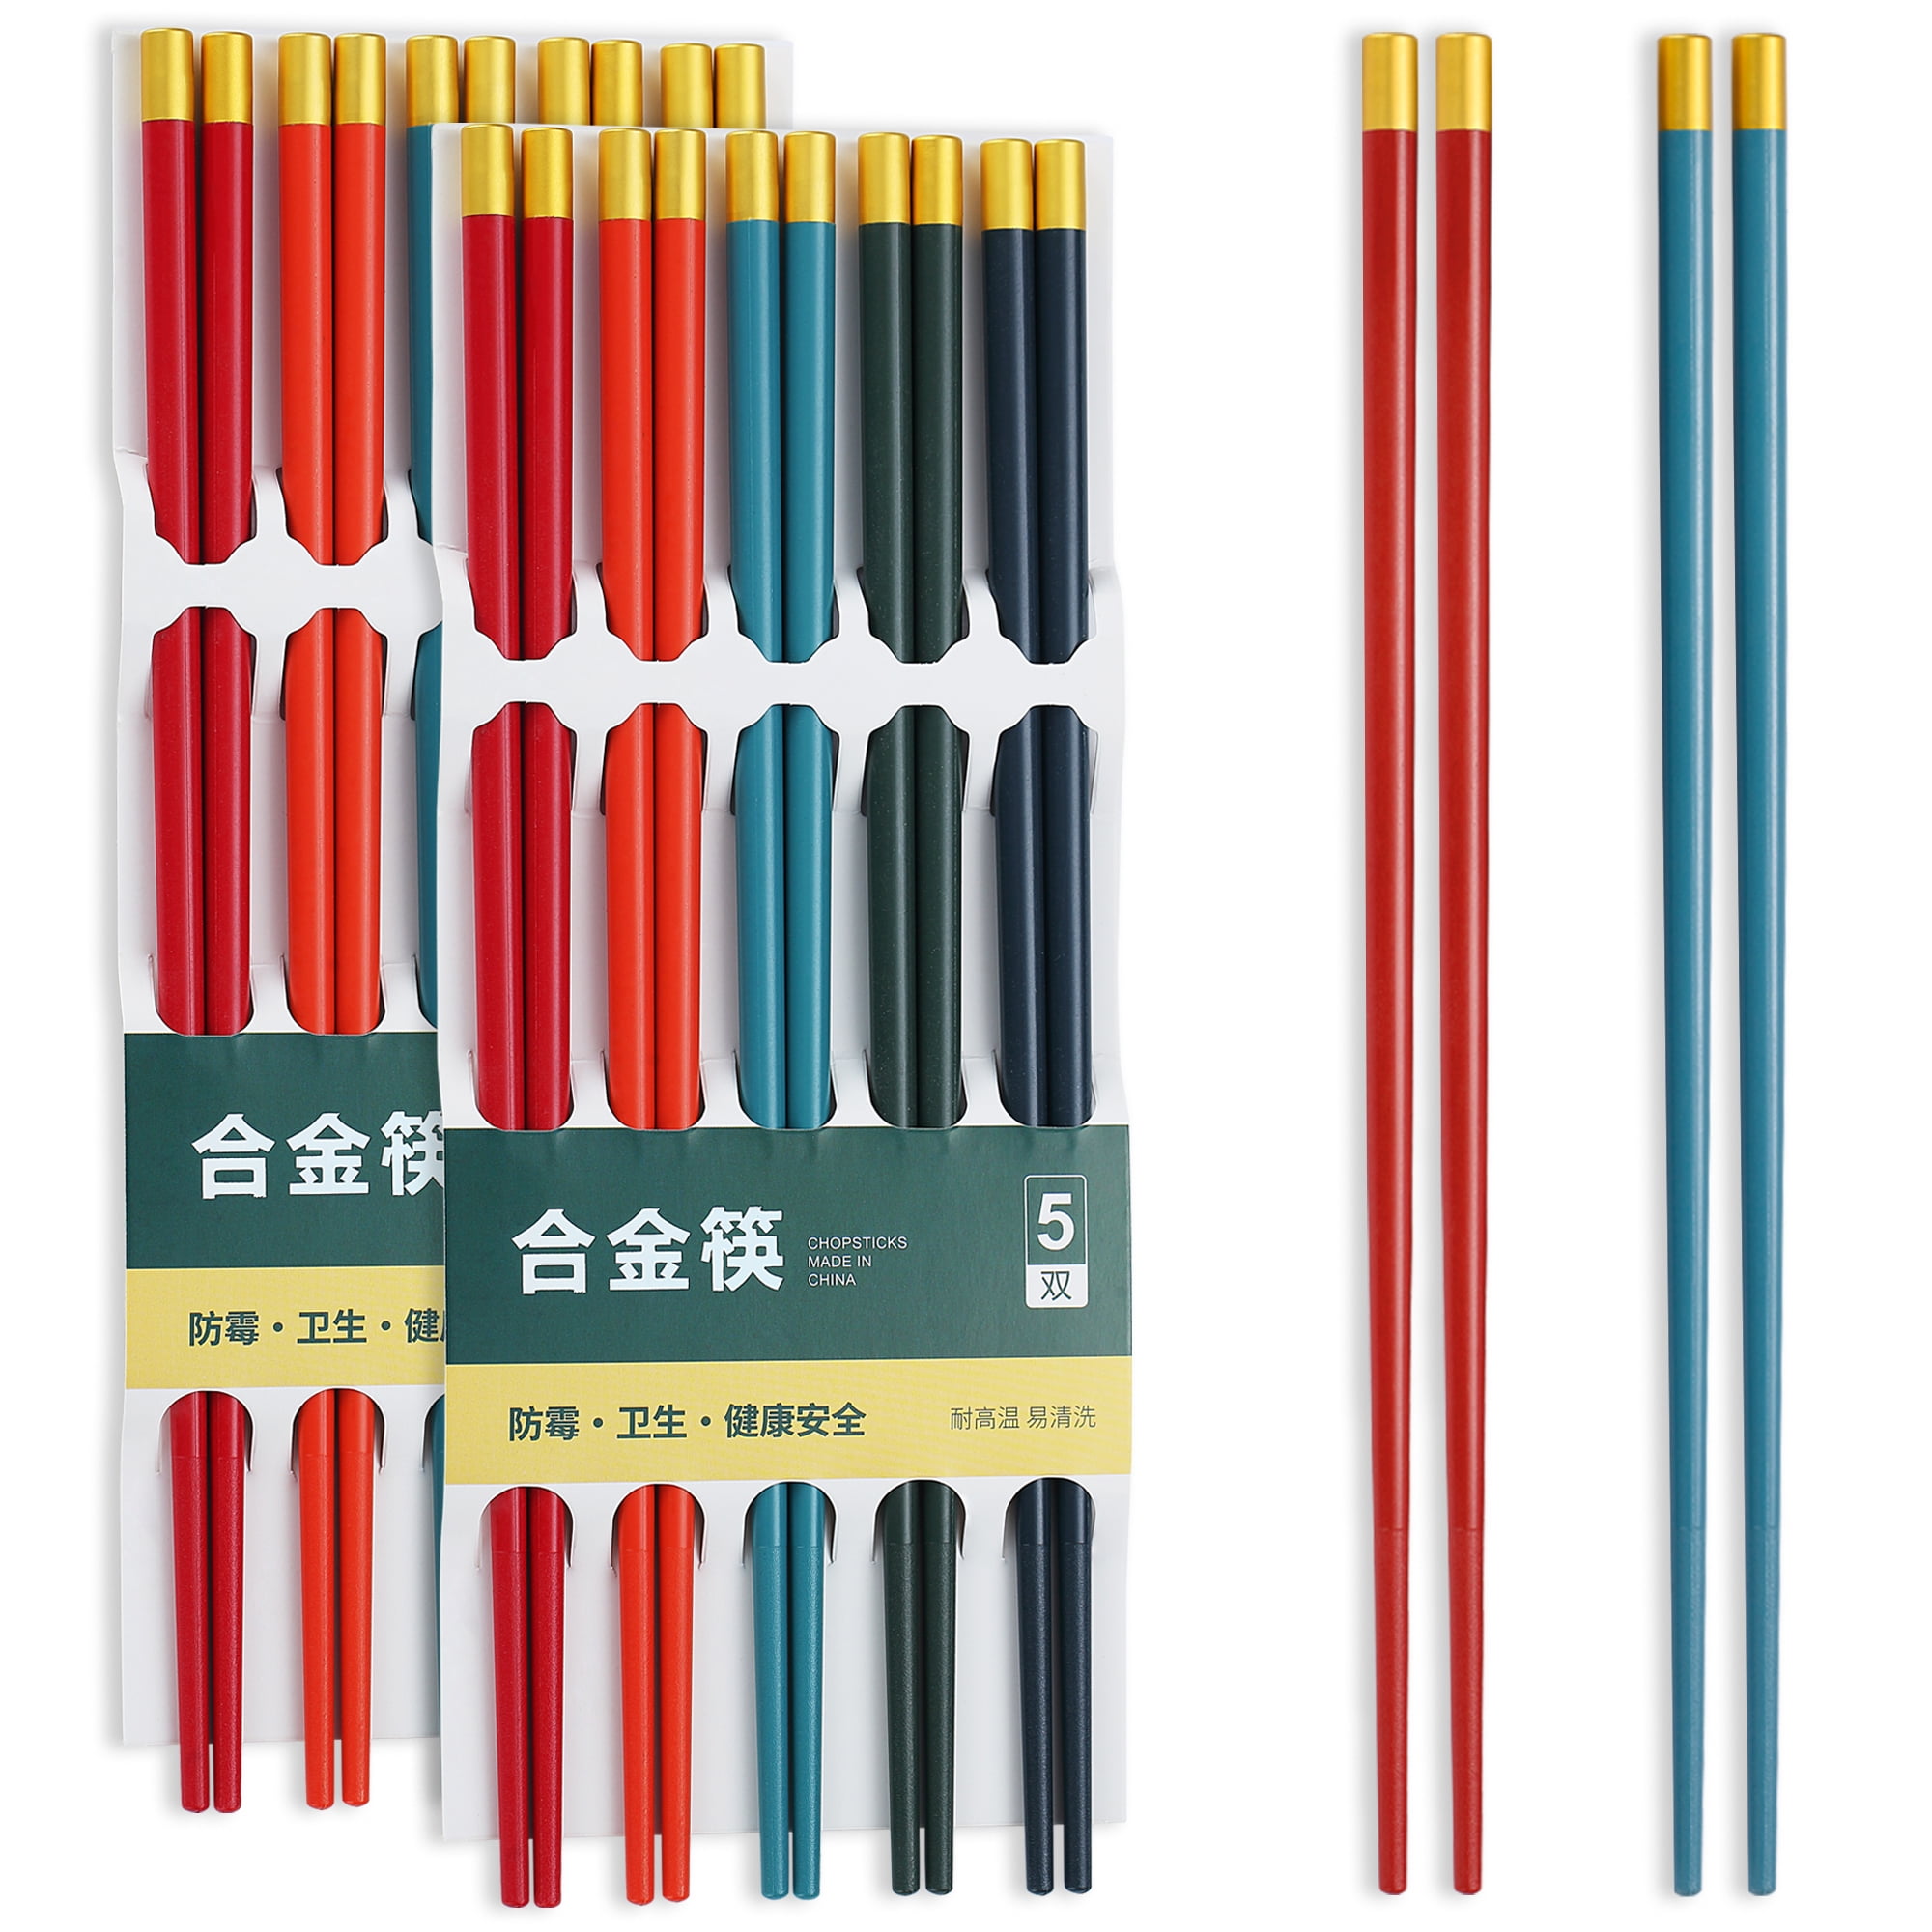 by Homestia Pack of 5 Gift Set Gift Set L Japanese Wood Chopsticks Set Reusable 8.8